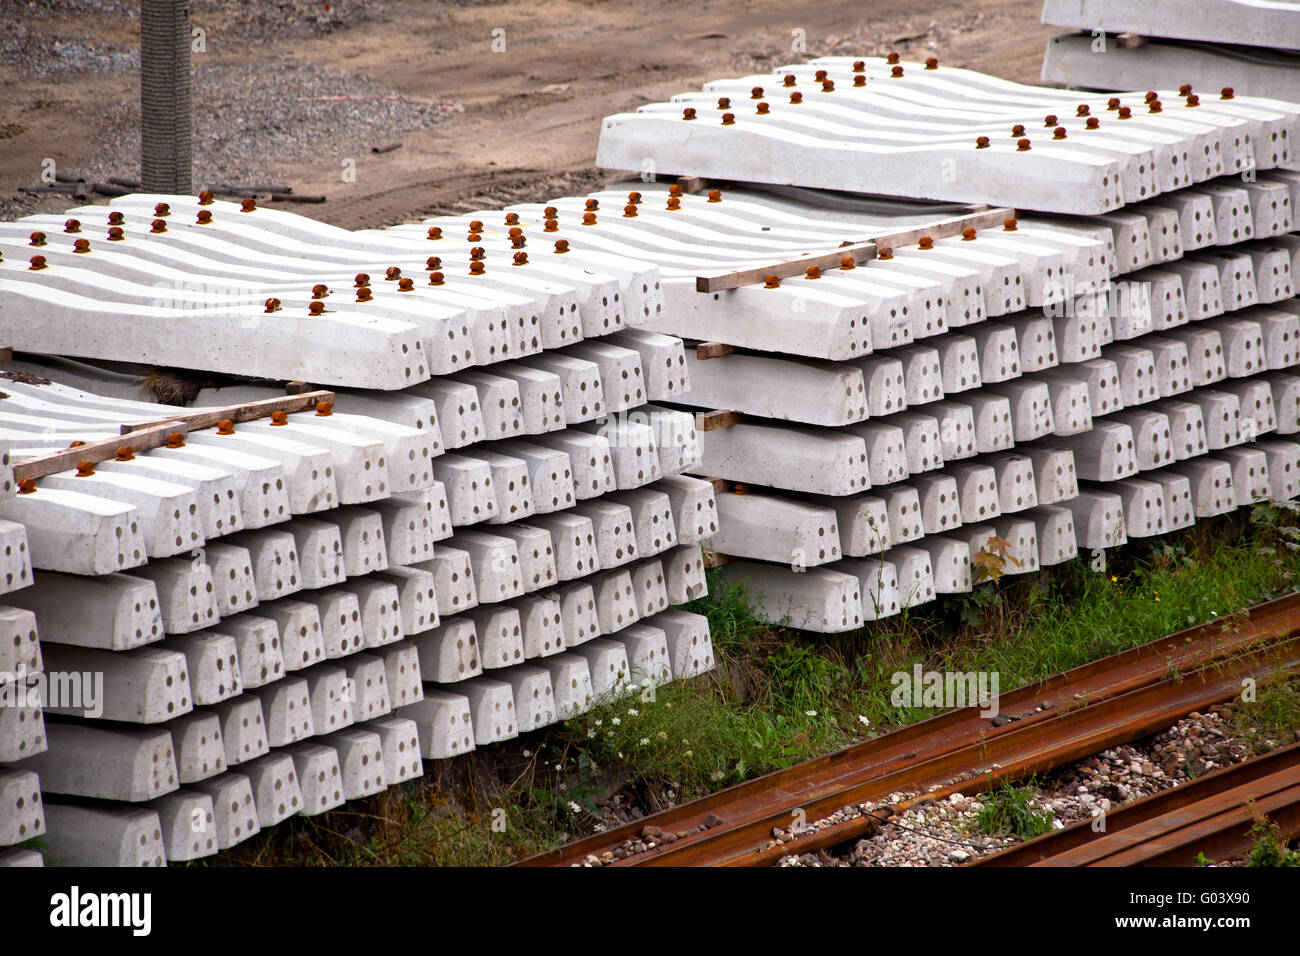 Stack of concrete railway sleepers on the ground Stock Photo - Alamy